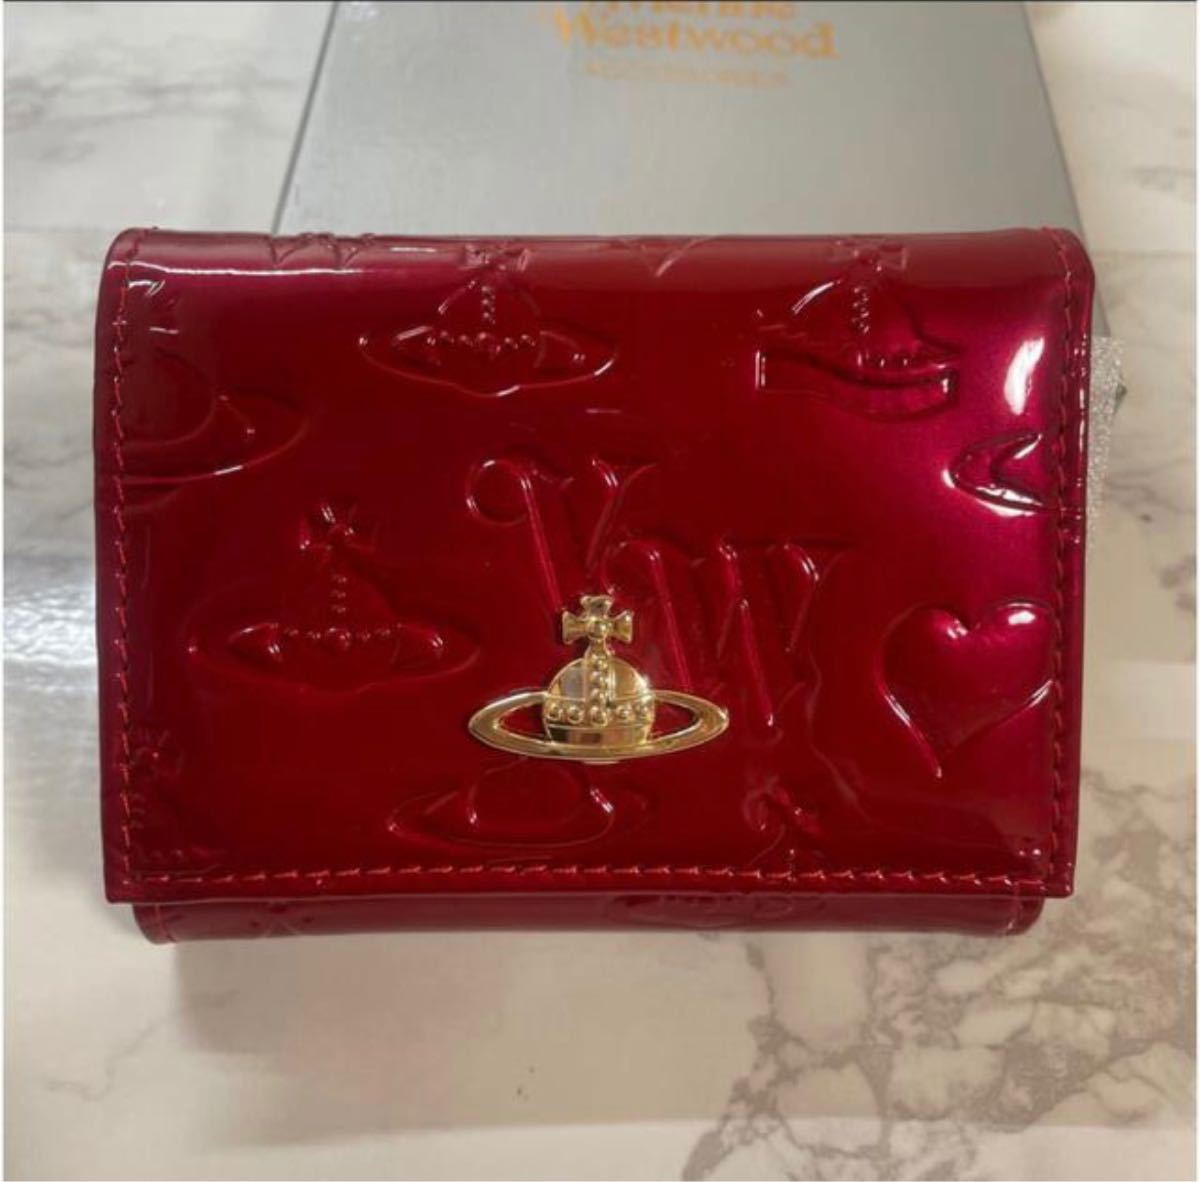 Vivienne Westwood ヴィヴィアンウエストウッド 三つ折り財布 赤 ヴィヴィアンウェストウッド エナメル財布 レッド